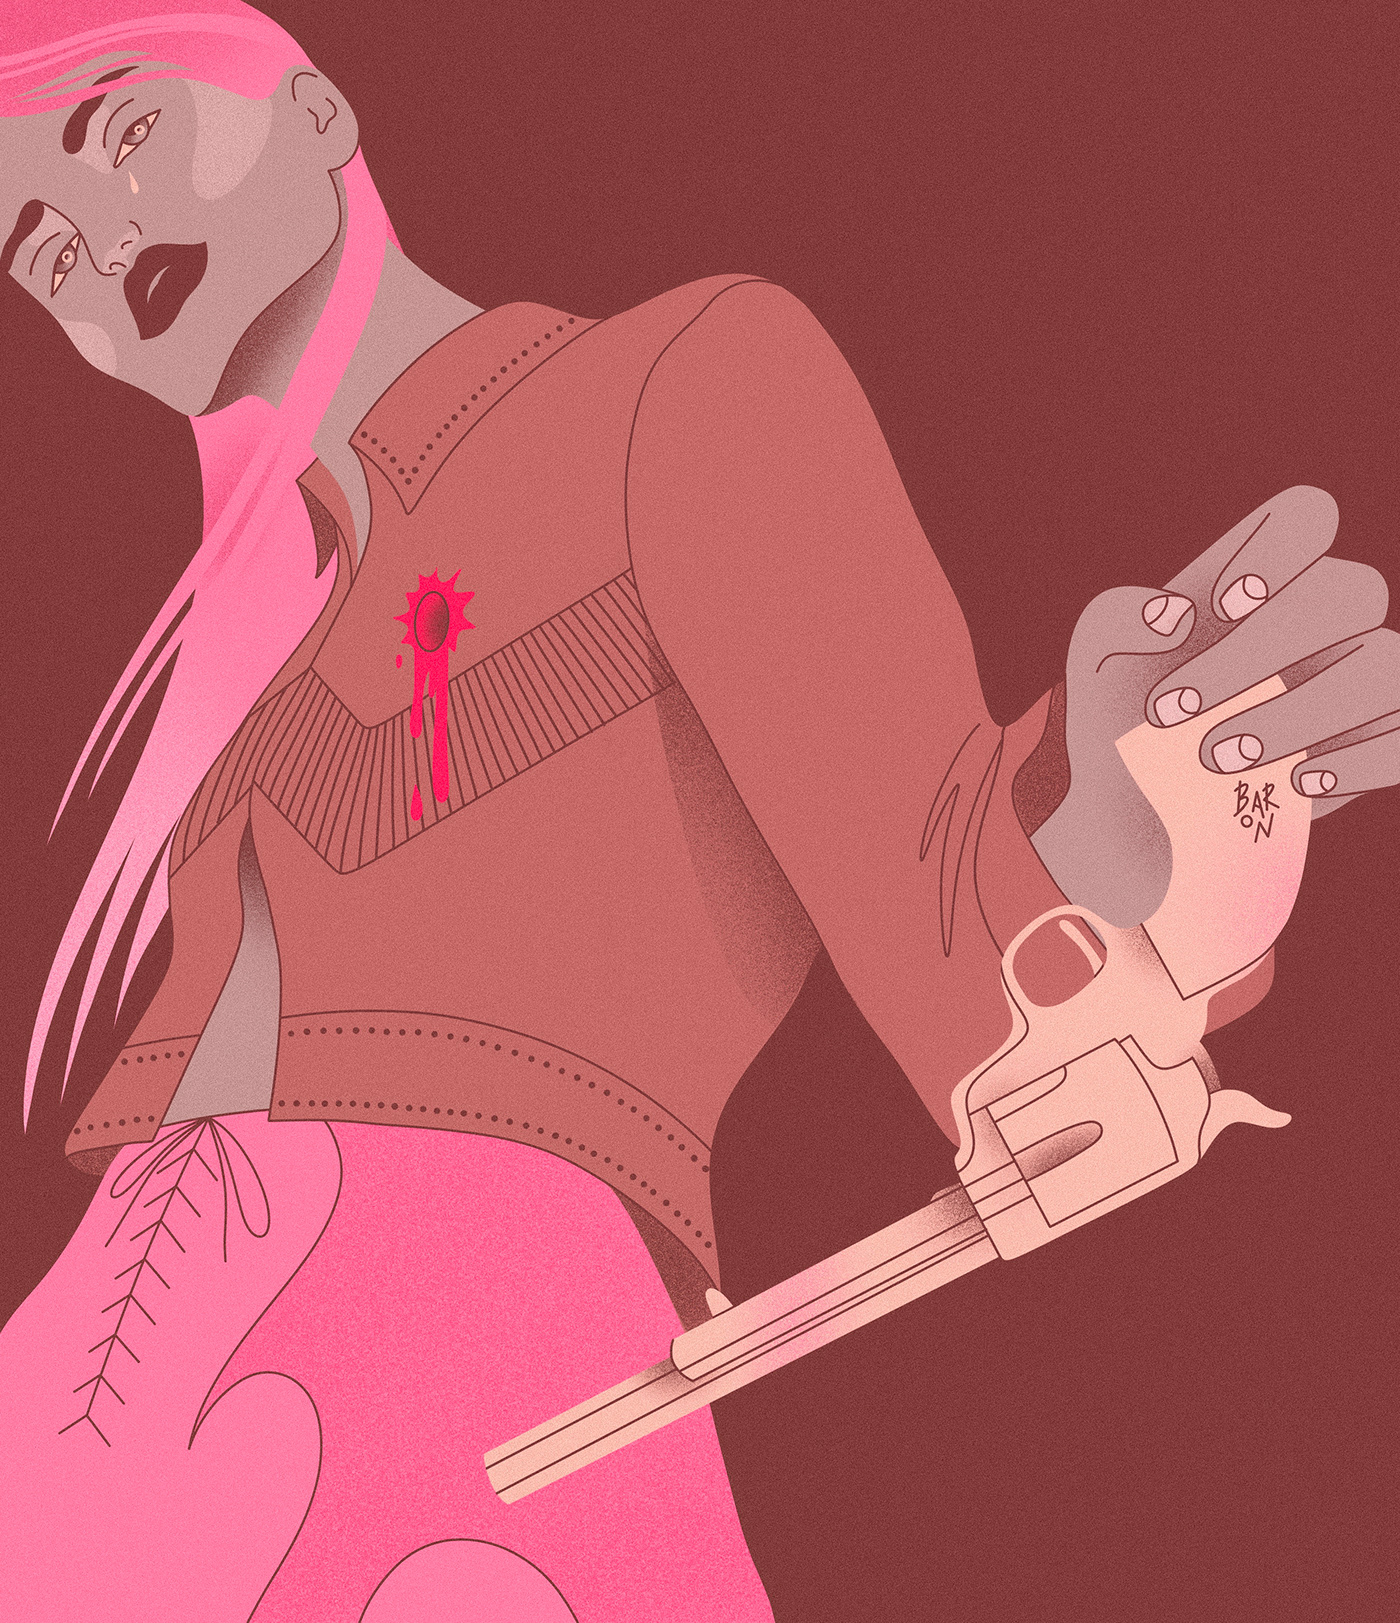 bangbang cowboy cowgirl fashion illustration girl illustration Girl Power Gun line art pink shot